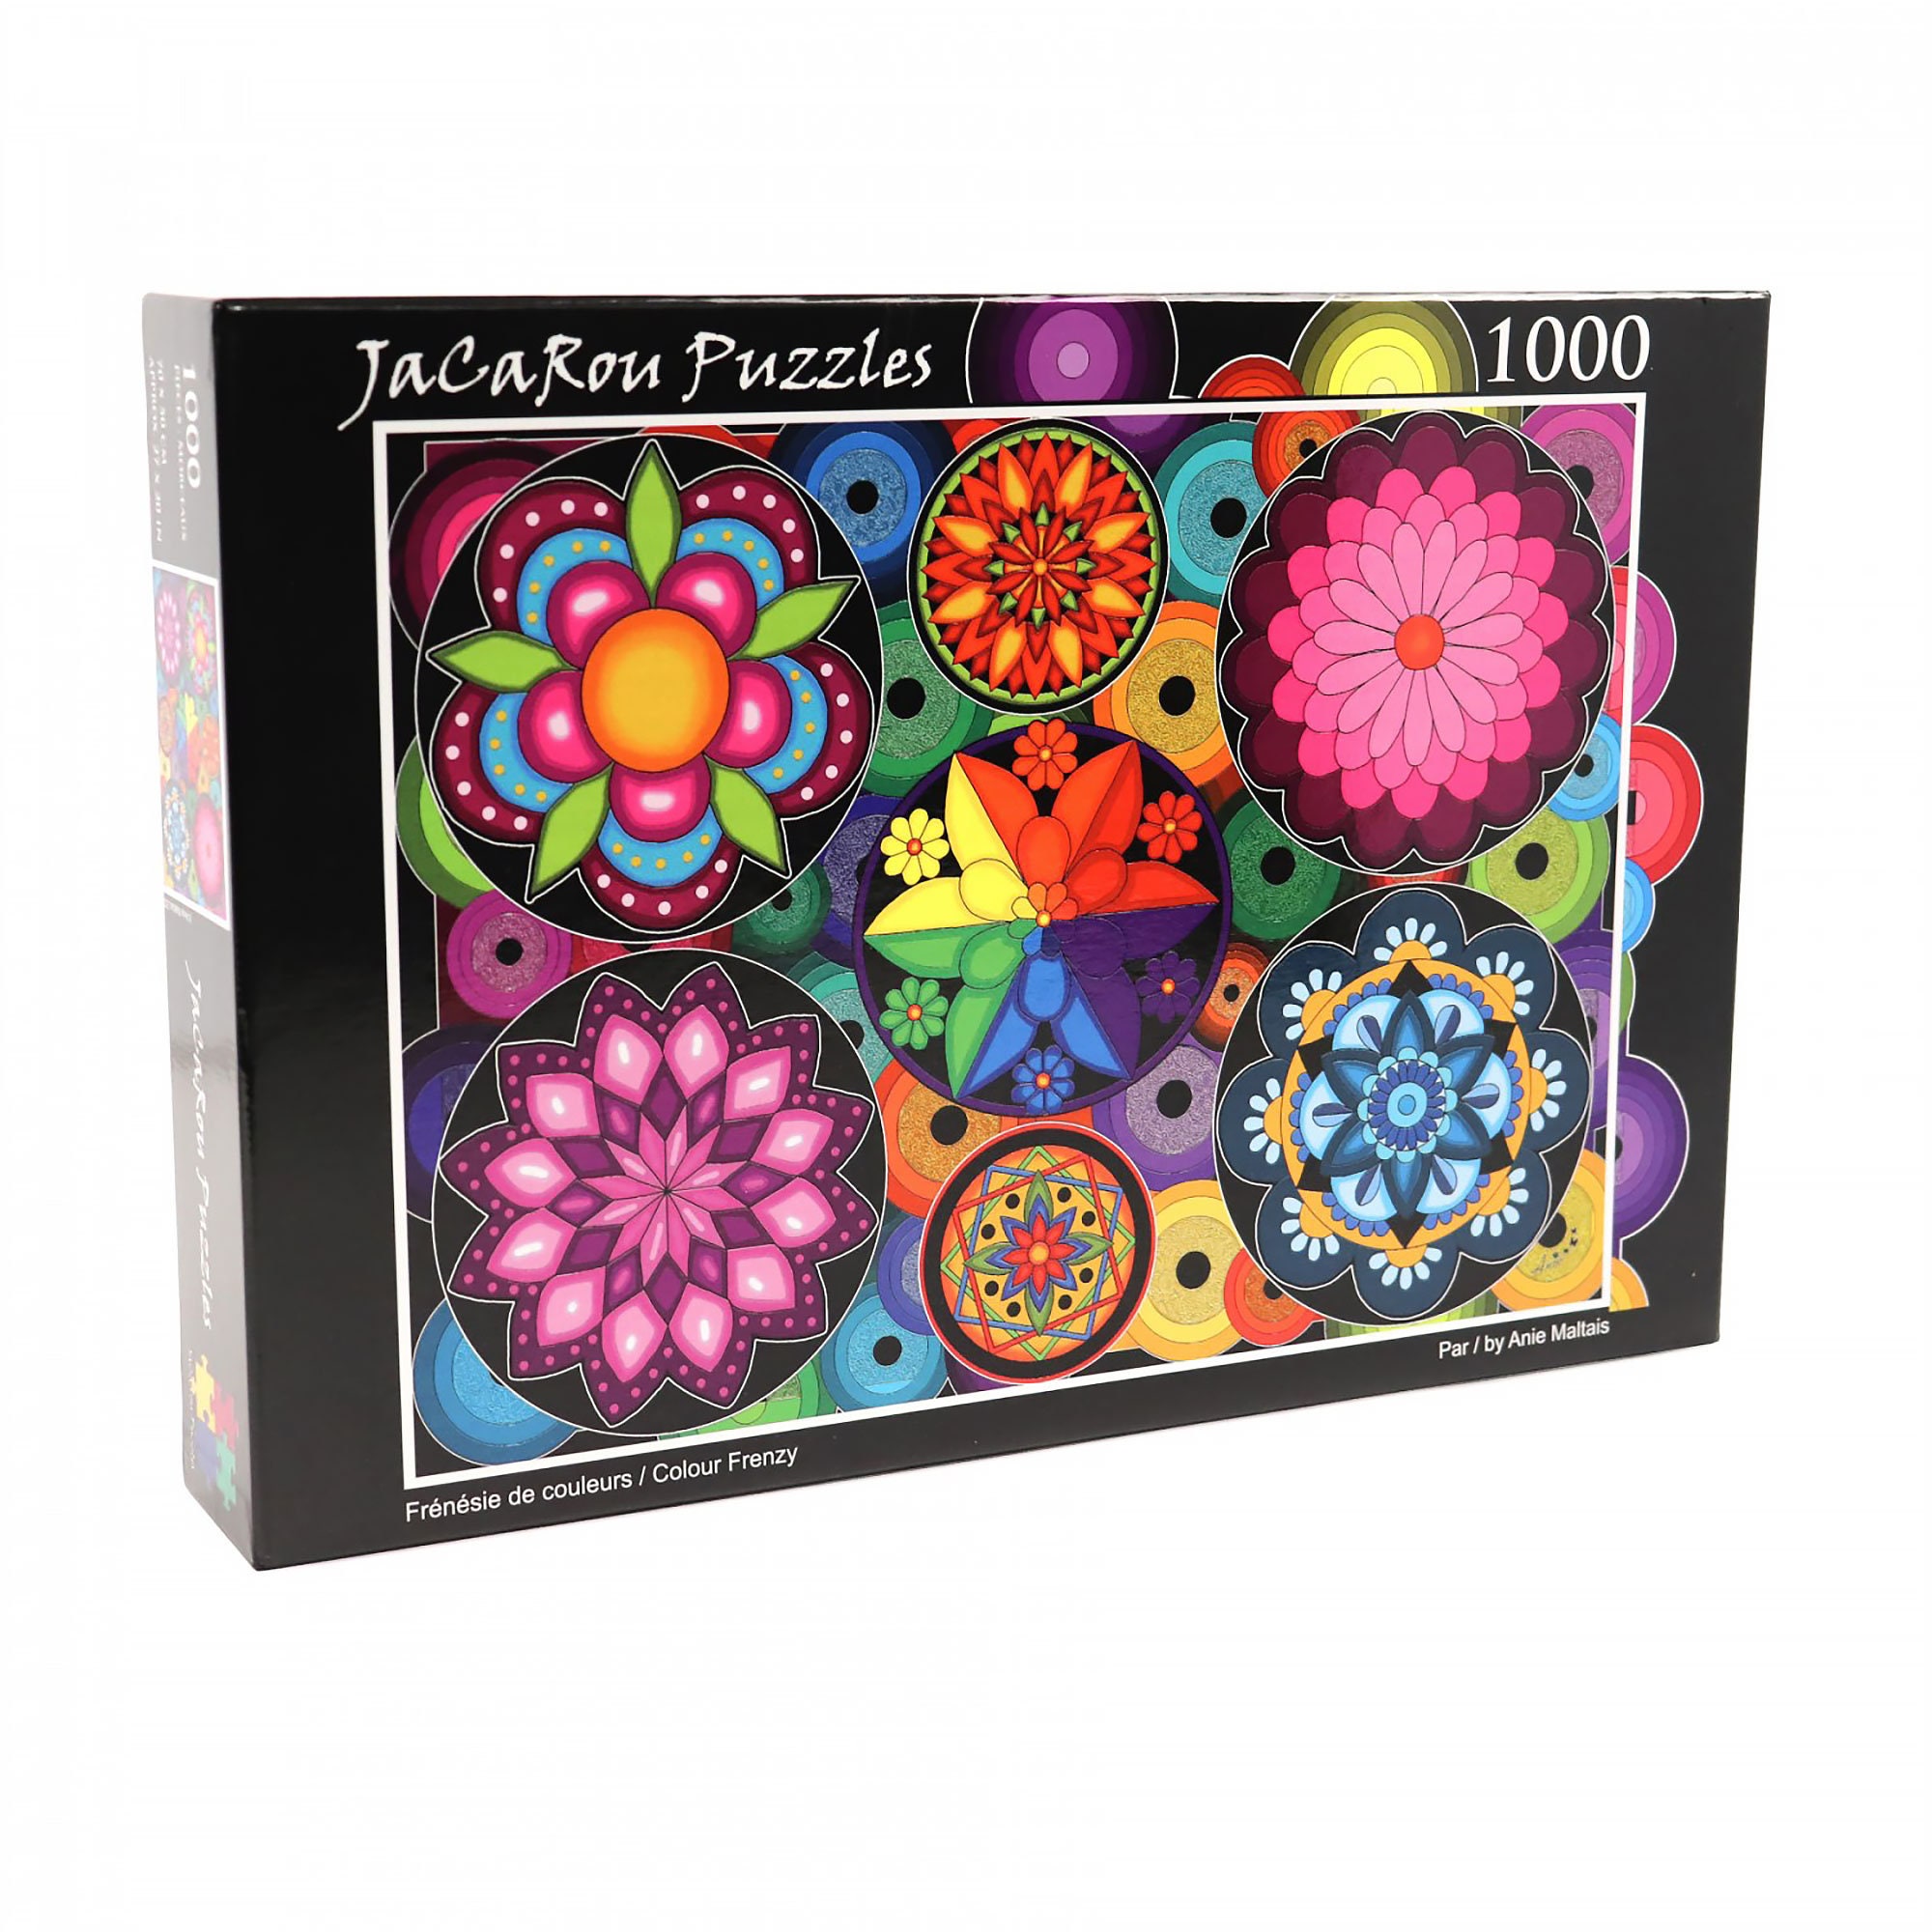 Colour Frenzy 1000pcs Jigsaw Puzzle - Etsy